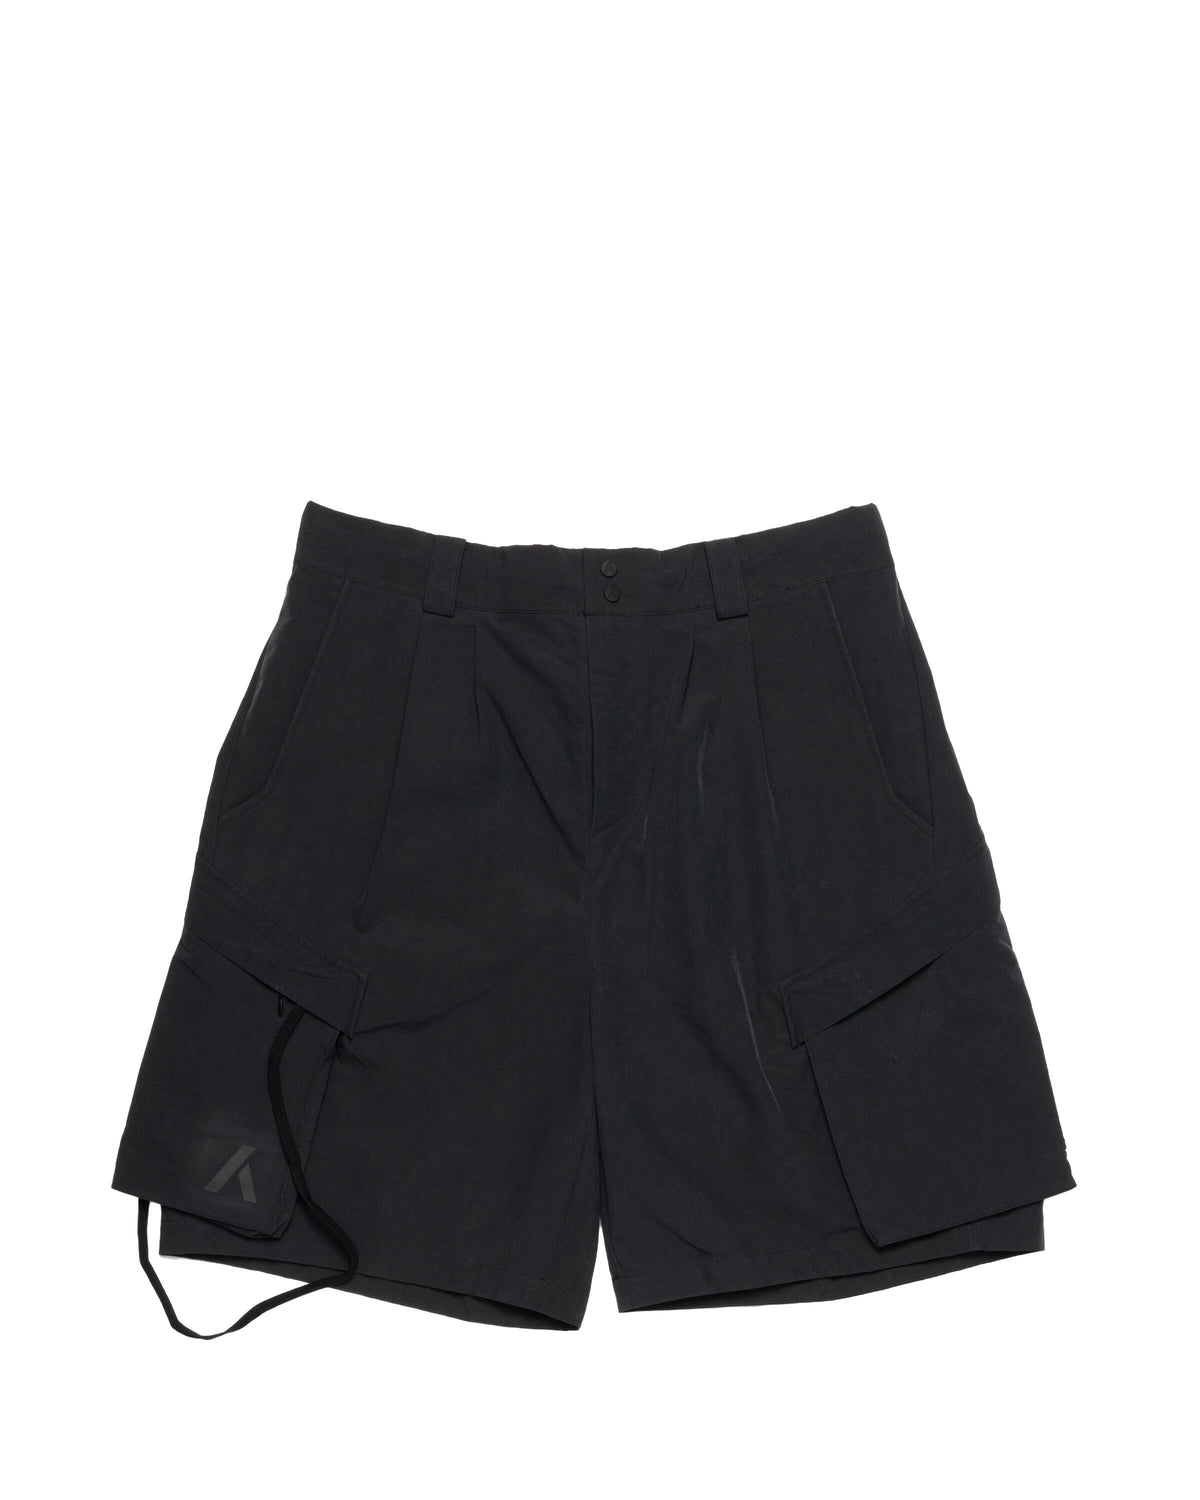 Arys dealer shorts